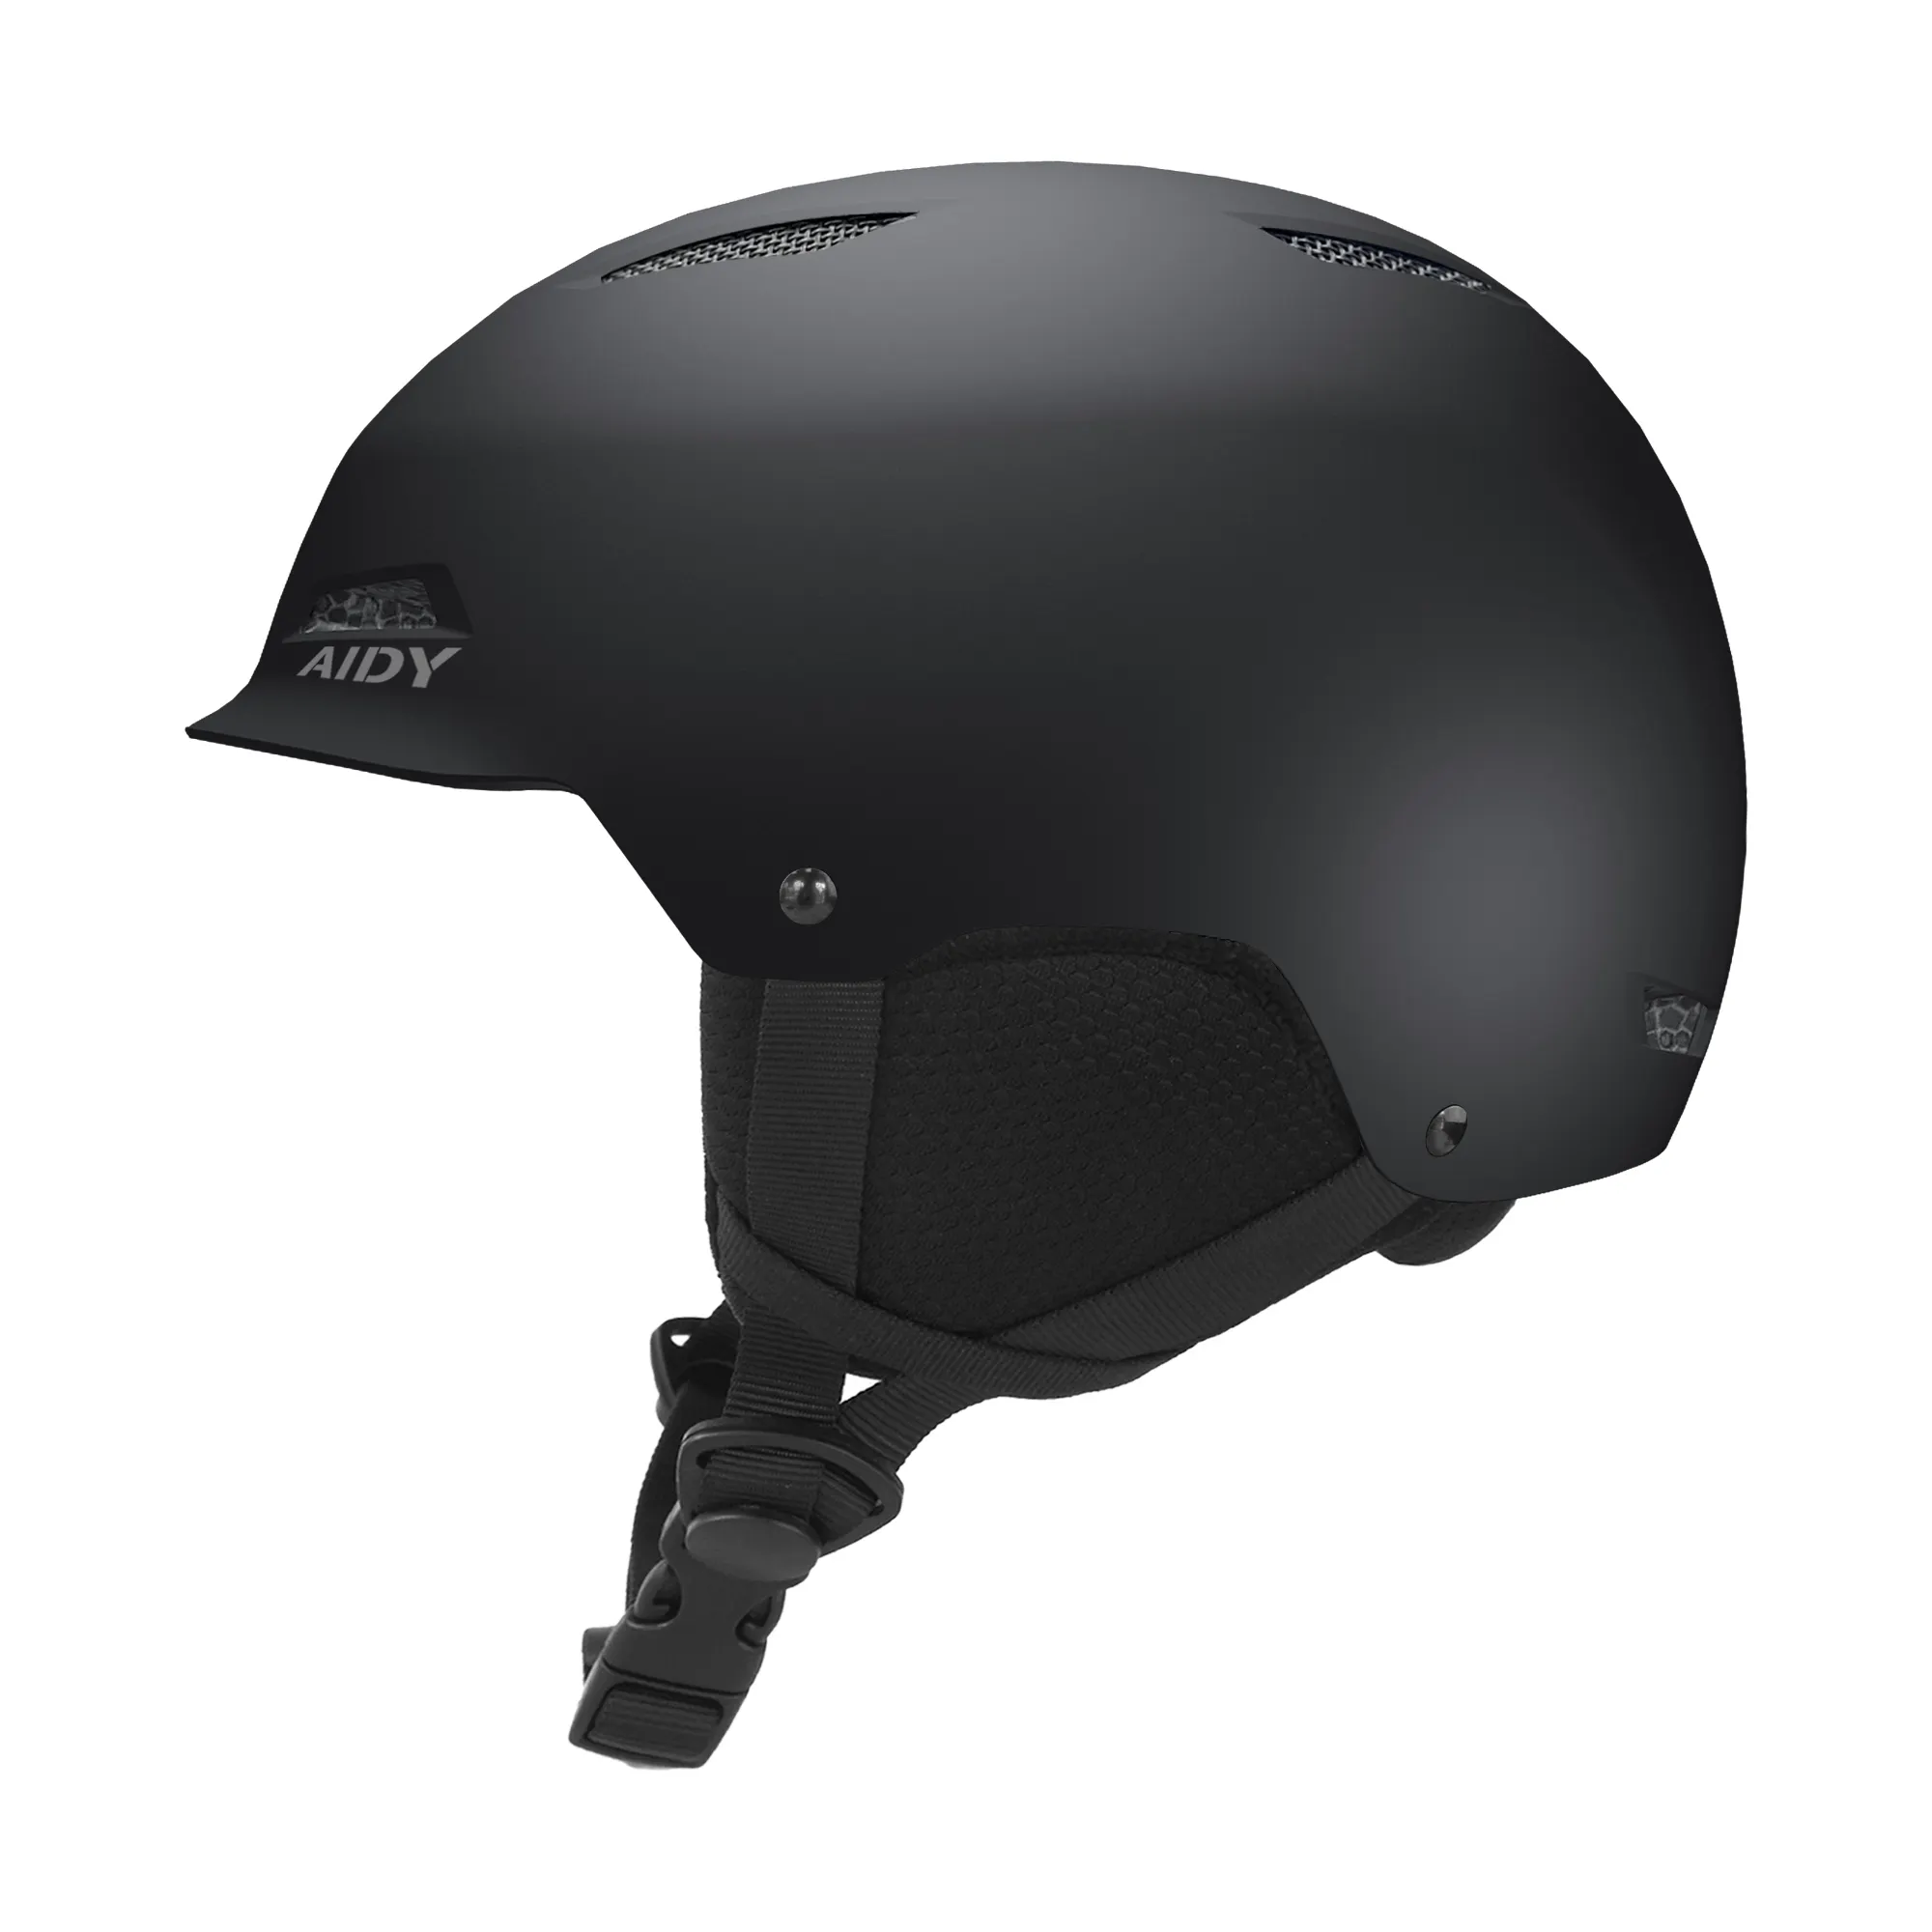 AIDY factory Winter Snow Sport Safety Ski Snowboard Skiing Helmet Headgear